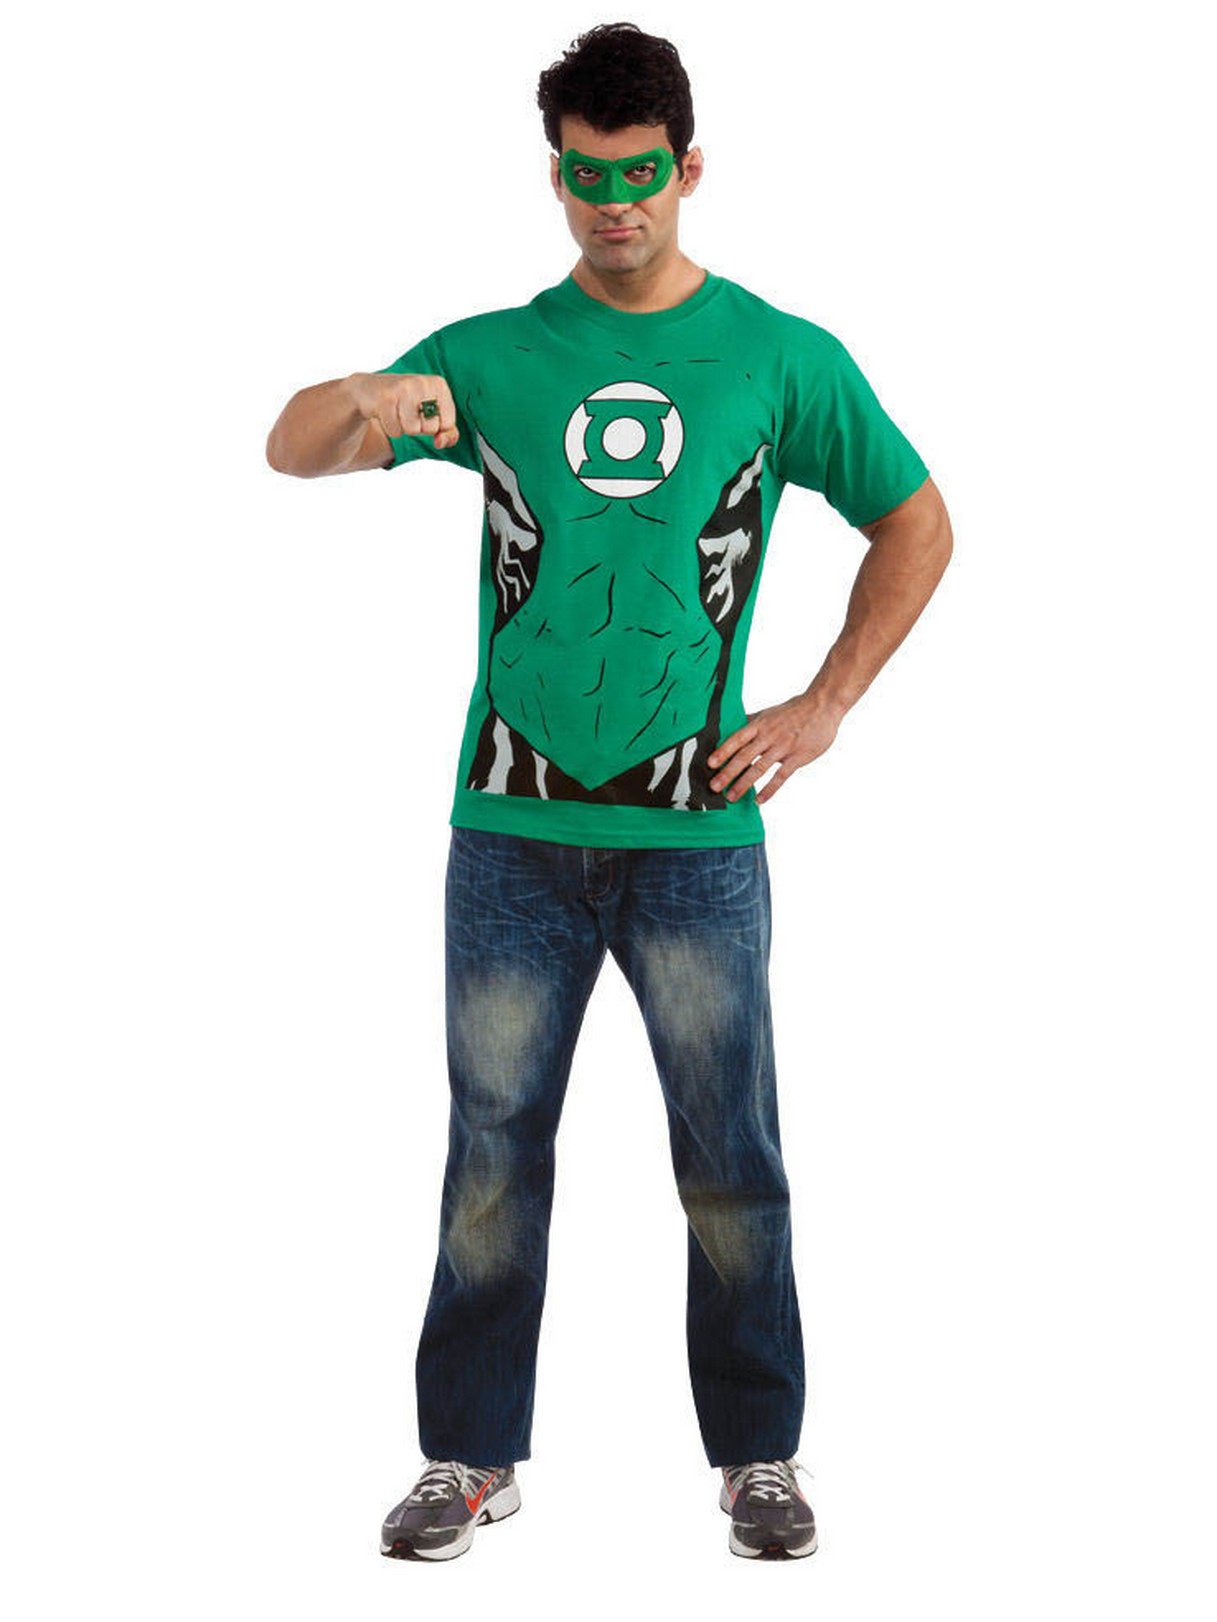 Green Lantern Costume Shirt